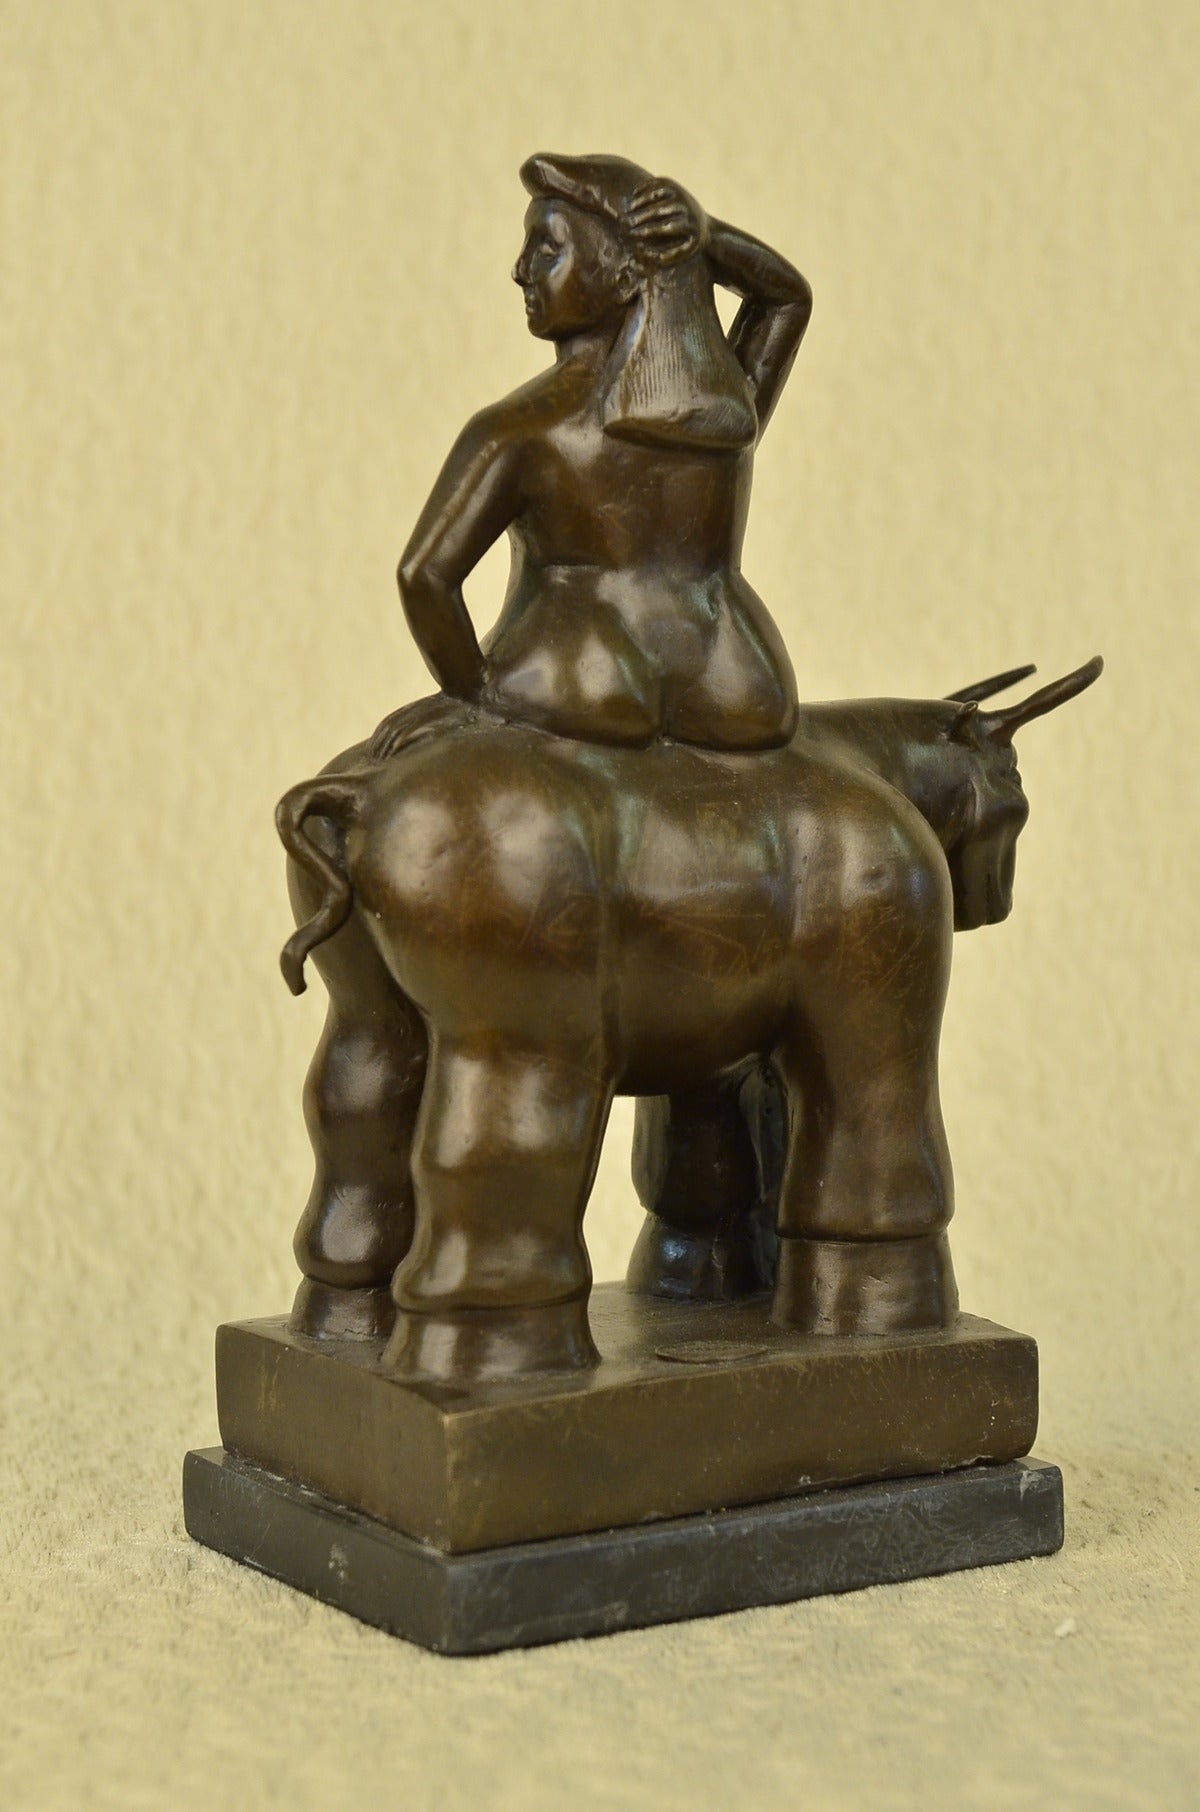 Handcrafted bronze sculpture SALE Gir Nude Century Mid Abstract Botero Fernando